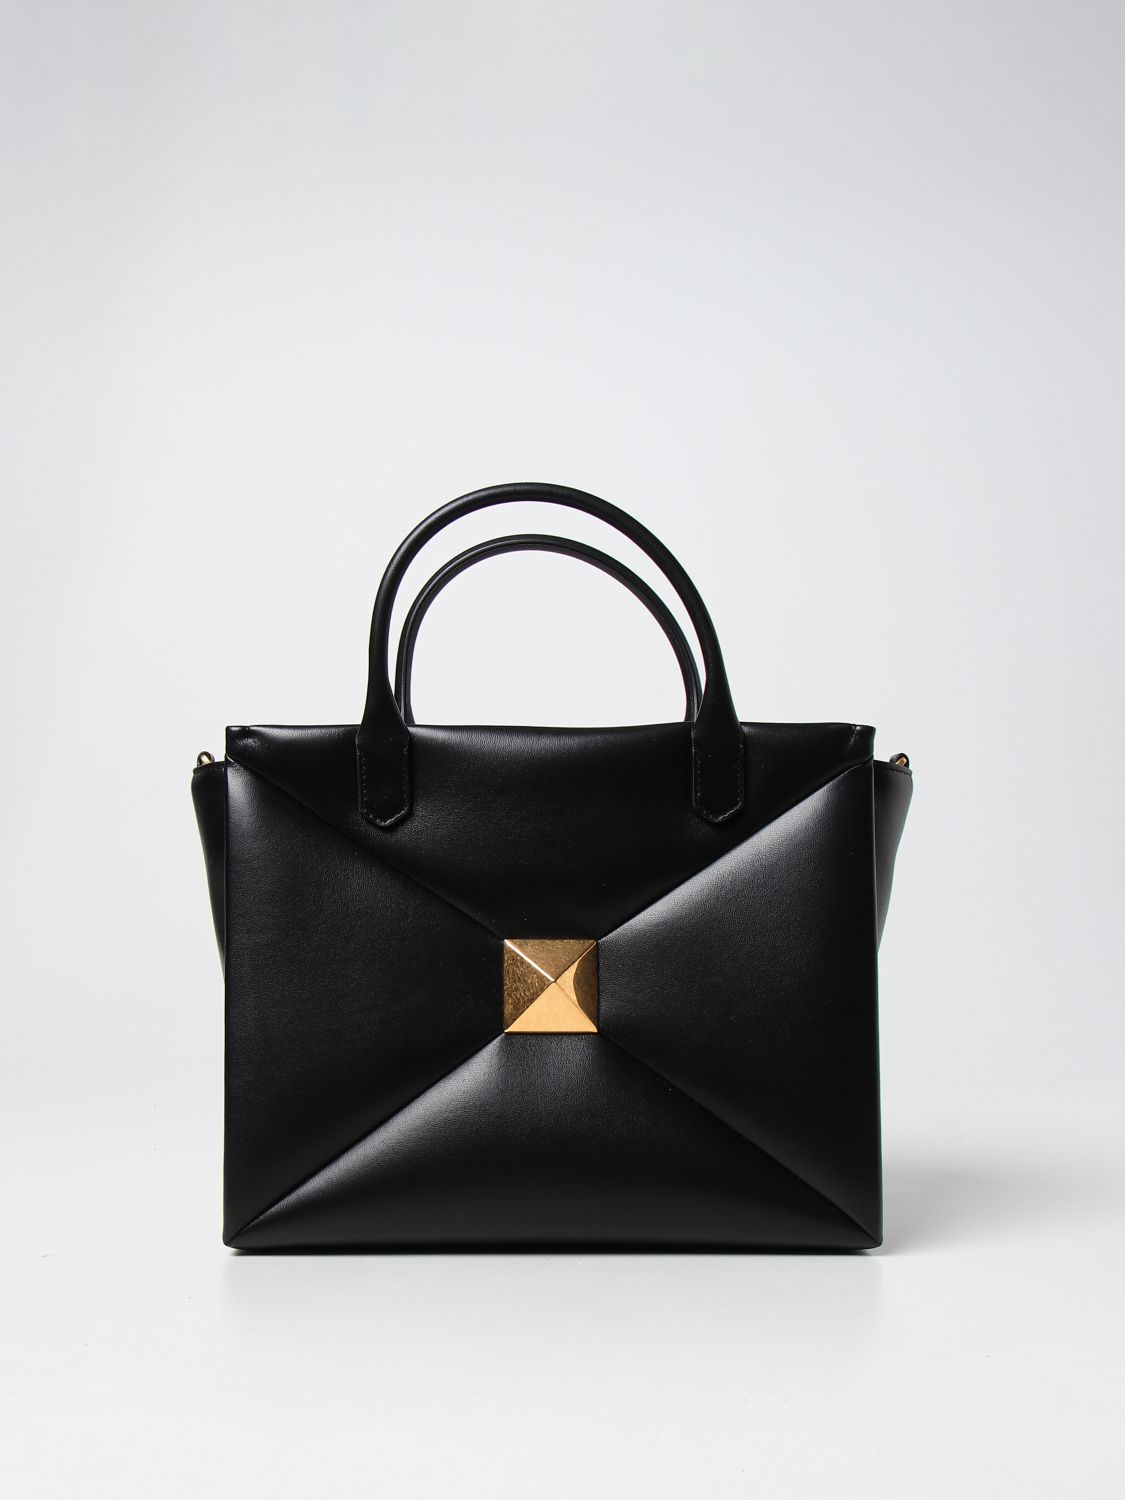 VALENTINO GARAVANI: One Stud Nappa leather bag - Black | Valentino ...